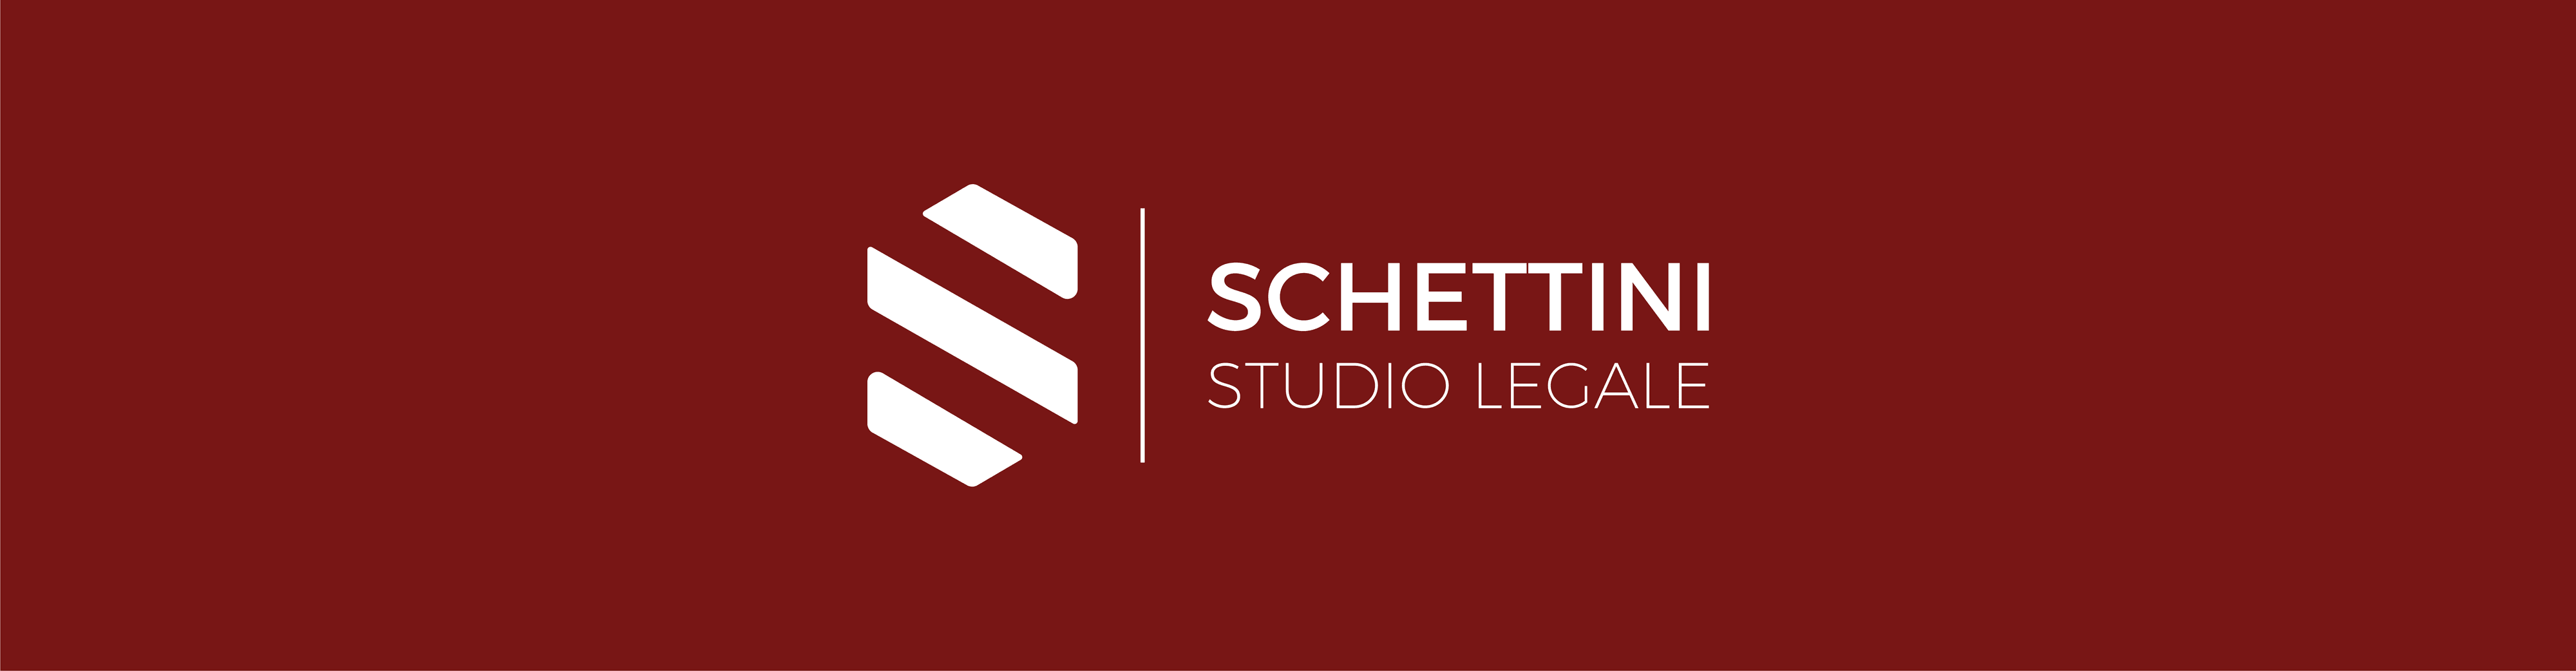 StudioLegaleSchettini Banner